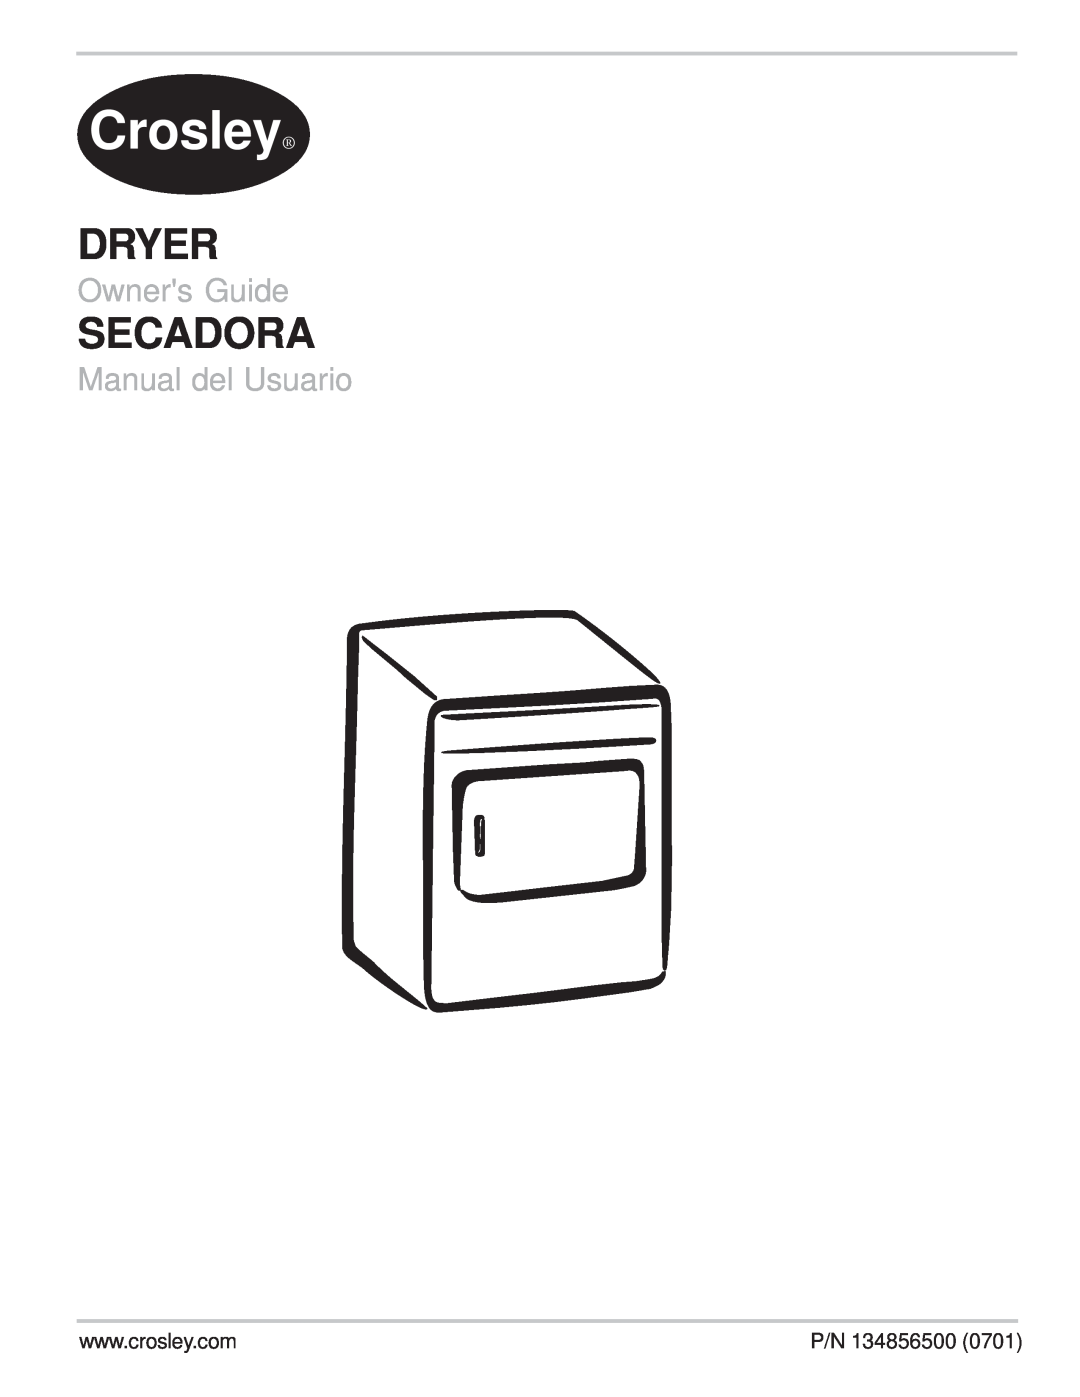 Crosley manual Crosley, Dryer, Secadora, Owners Guide, Manual del Usuario, P/N 134856500 